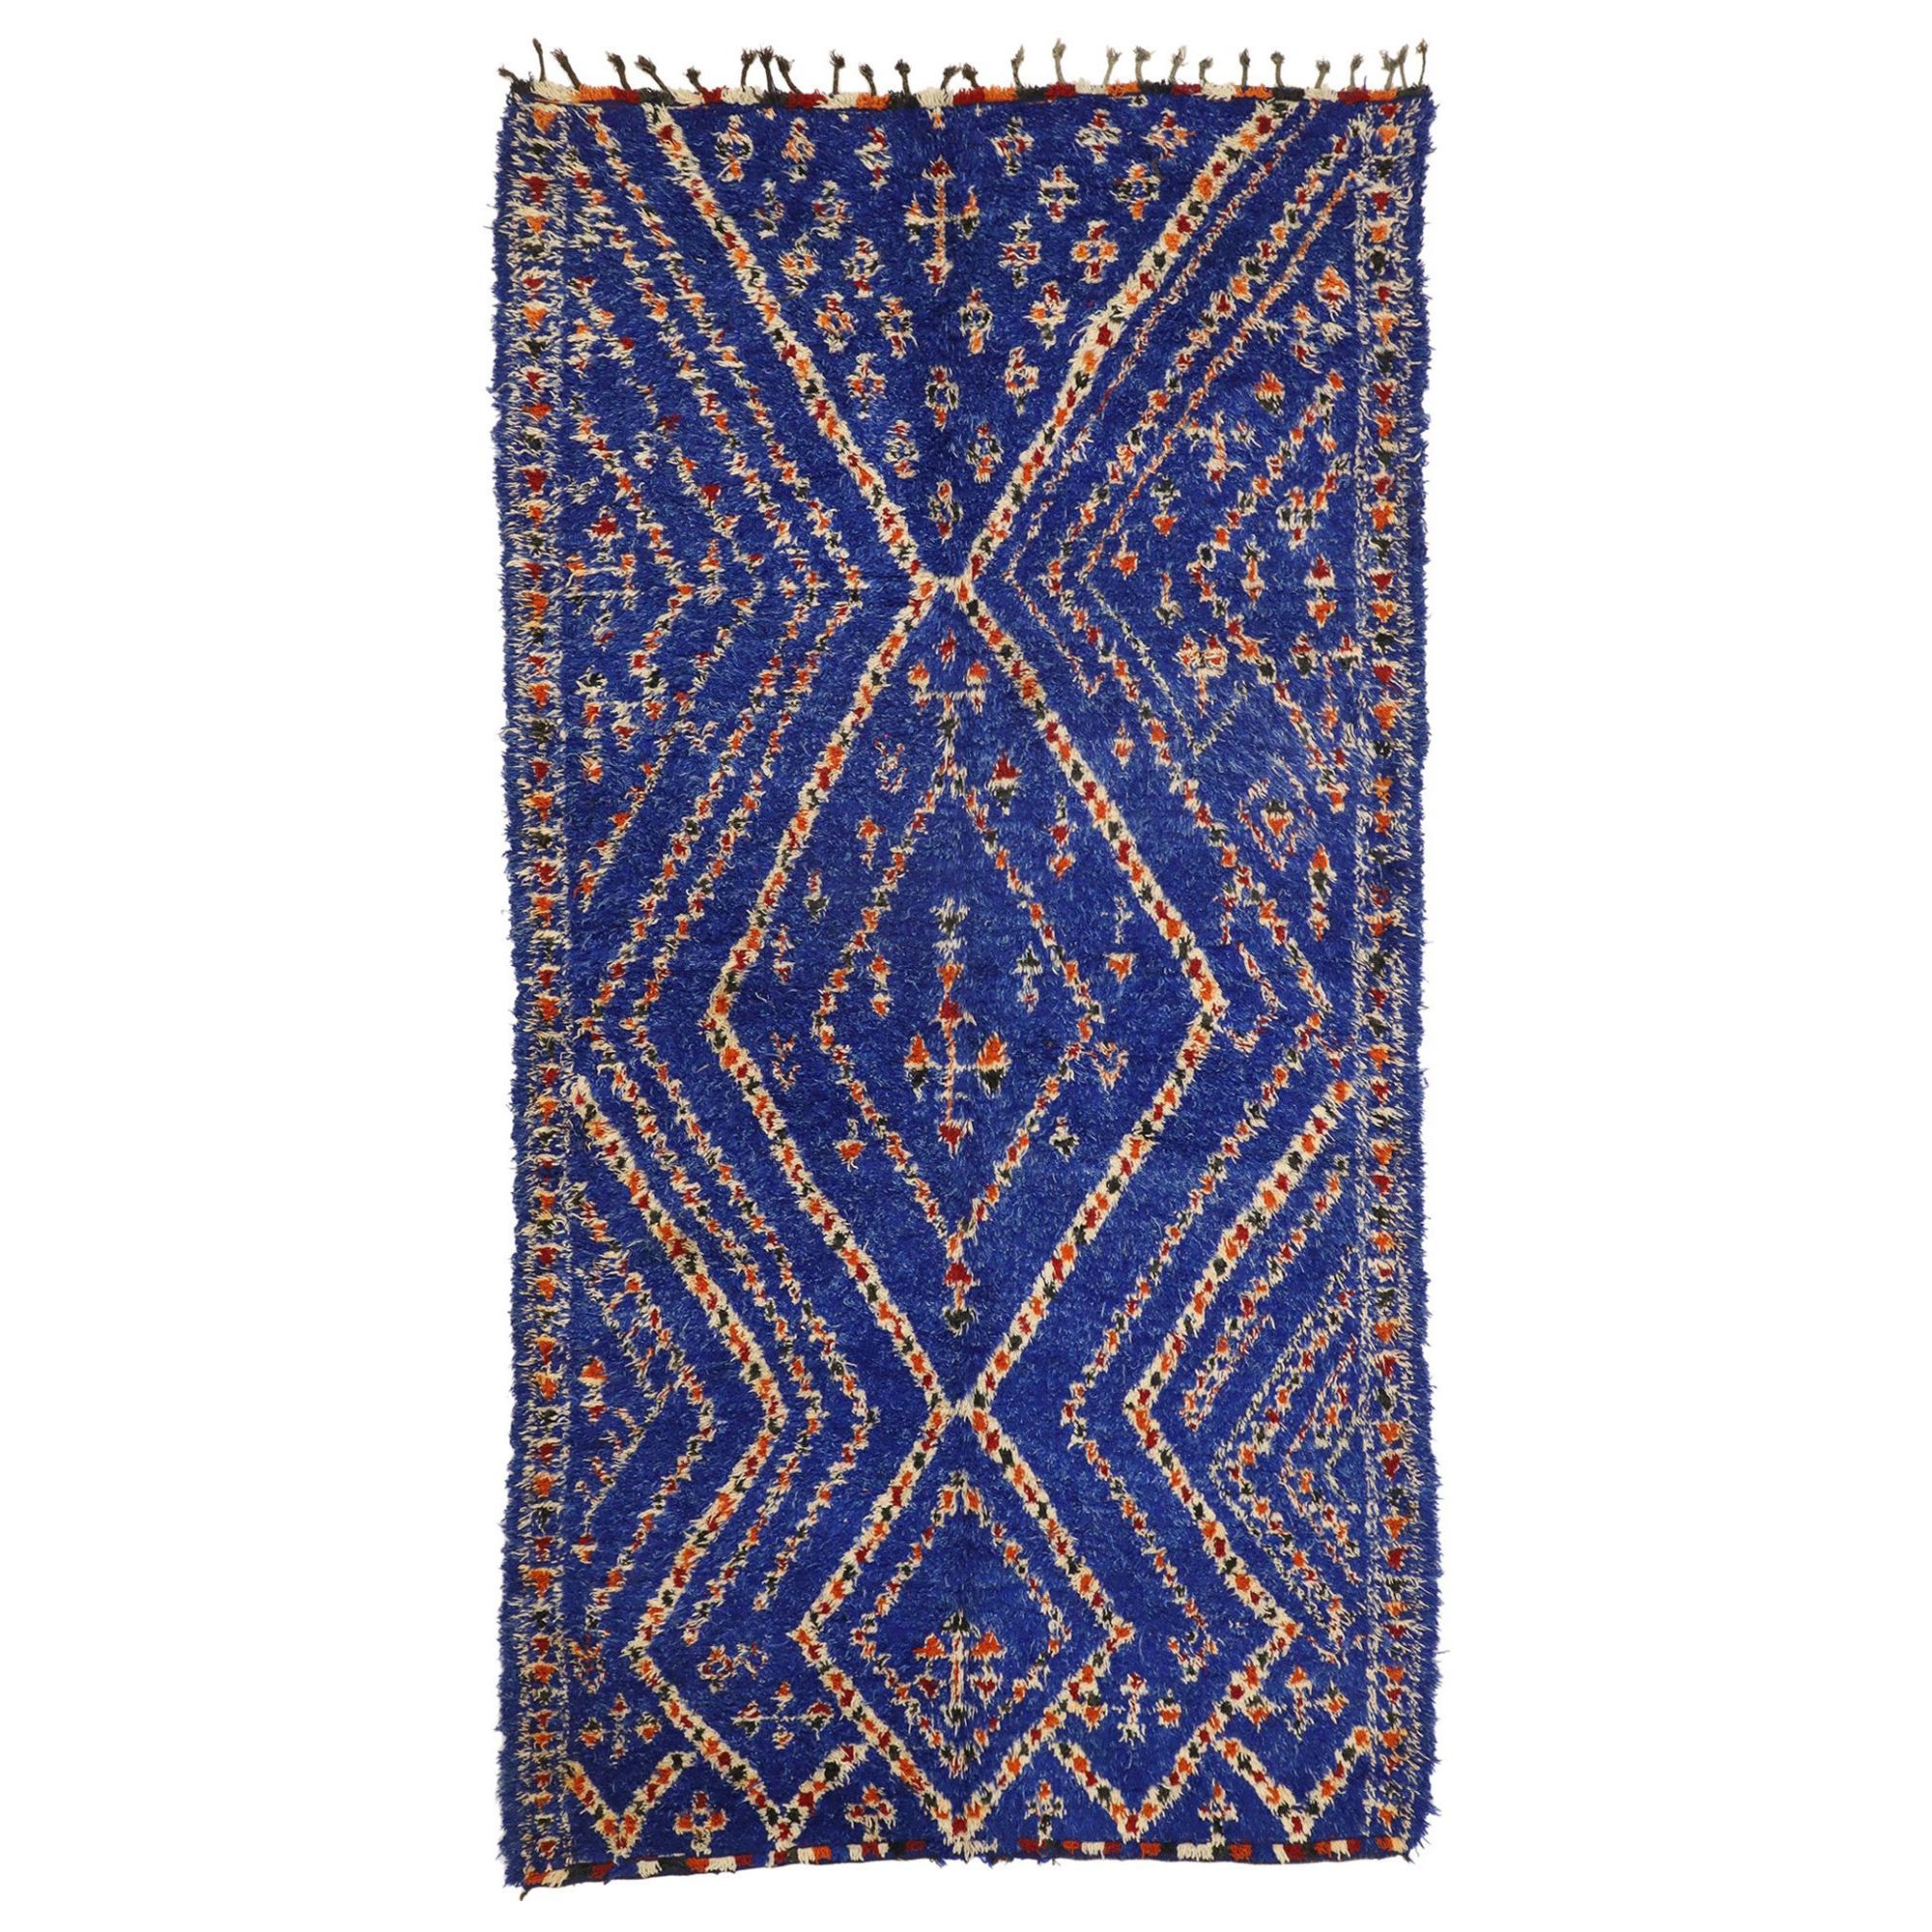 Vintage Indigo Blue Beni M'Guild Moroccan Rug with Modern Boho Tribal Style